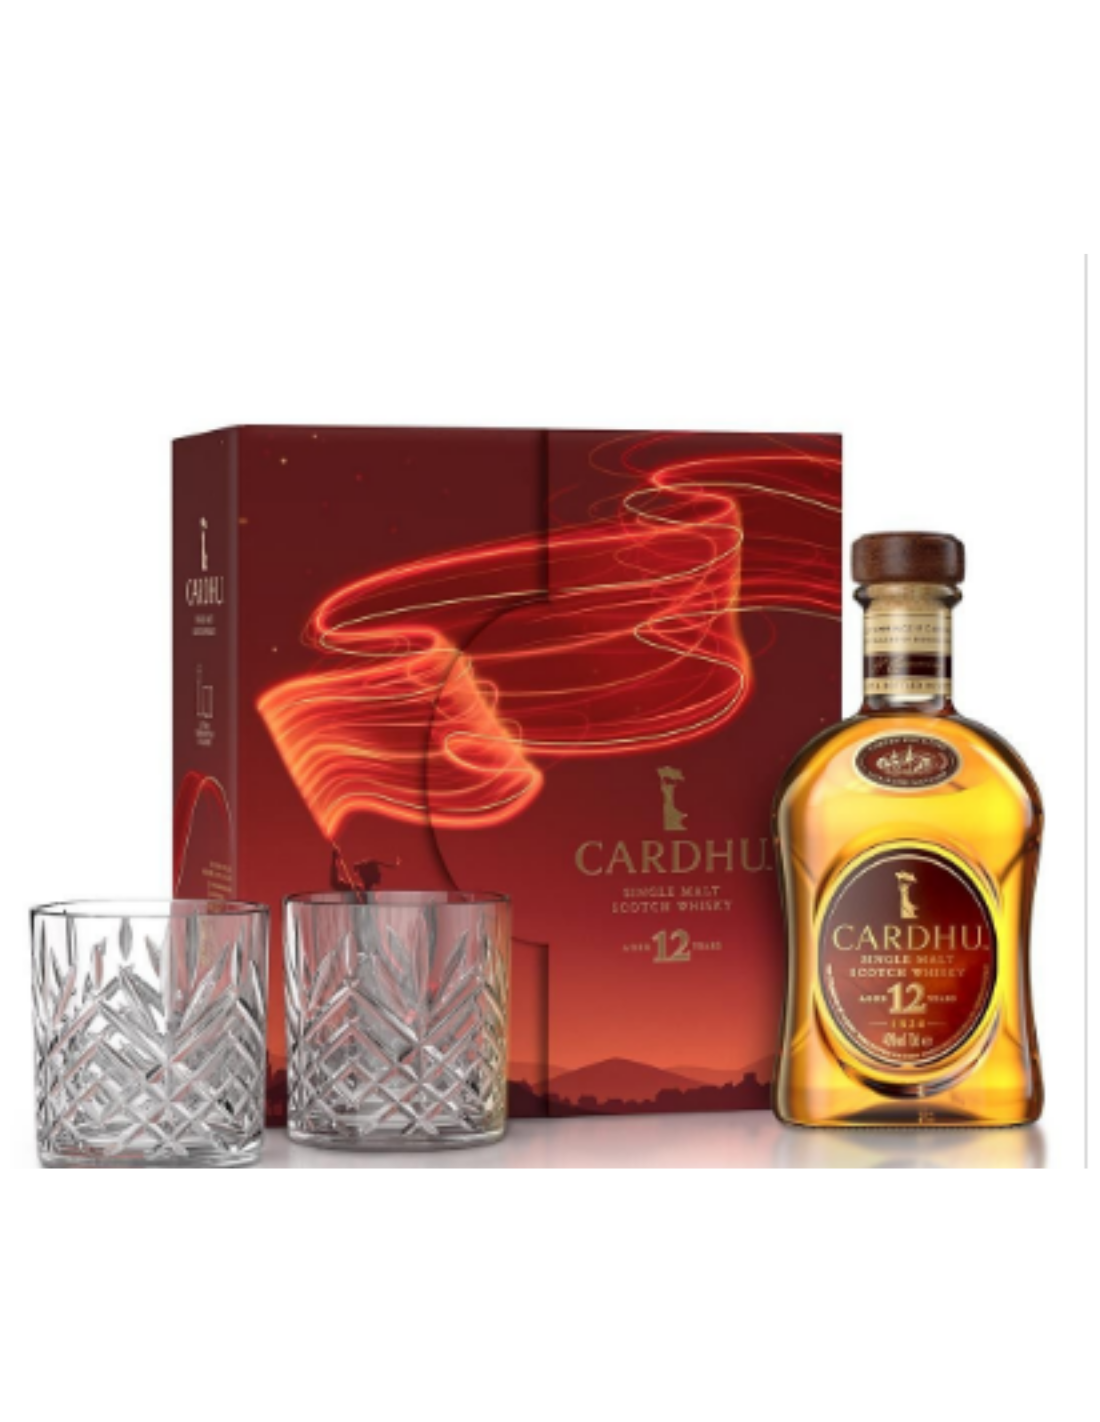 Whisky Cardhu 12 ani + 2 Pahare 0.7L, 12 ani, 40% alc., Scotia alcooldiscount.ro